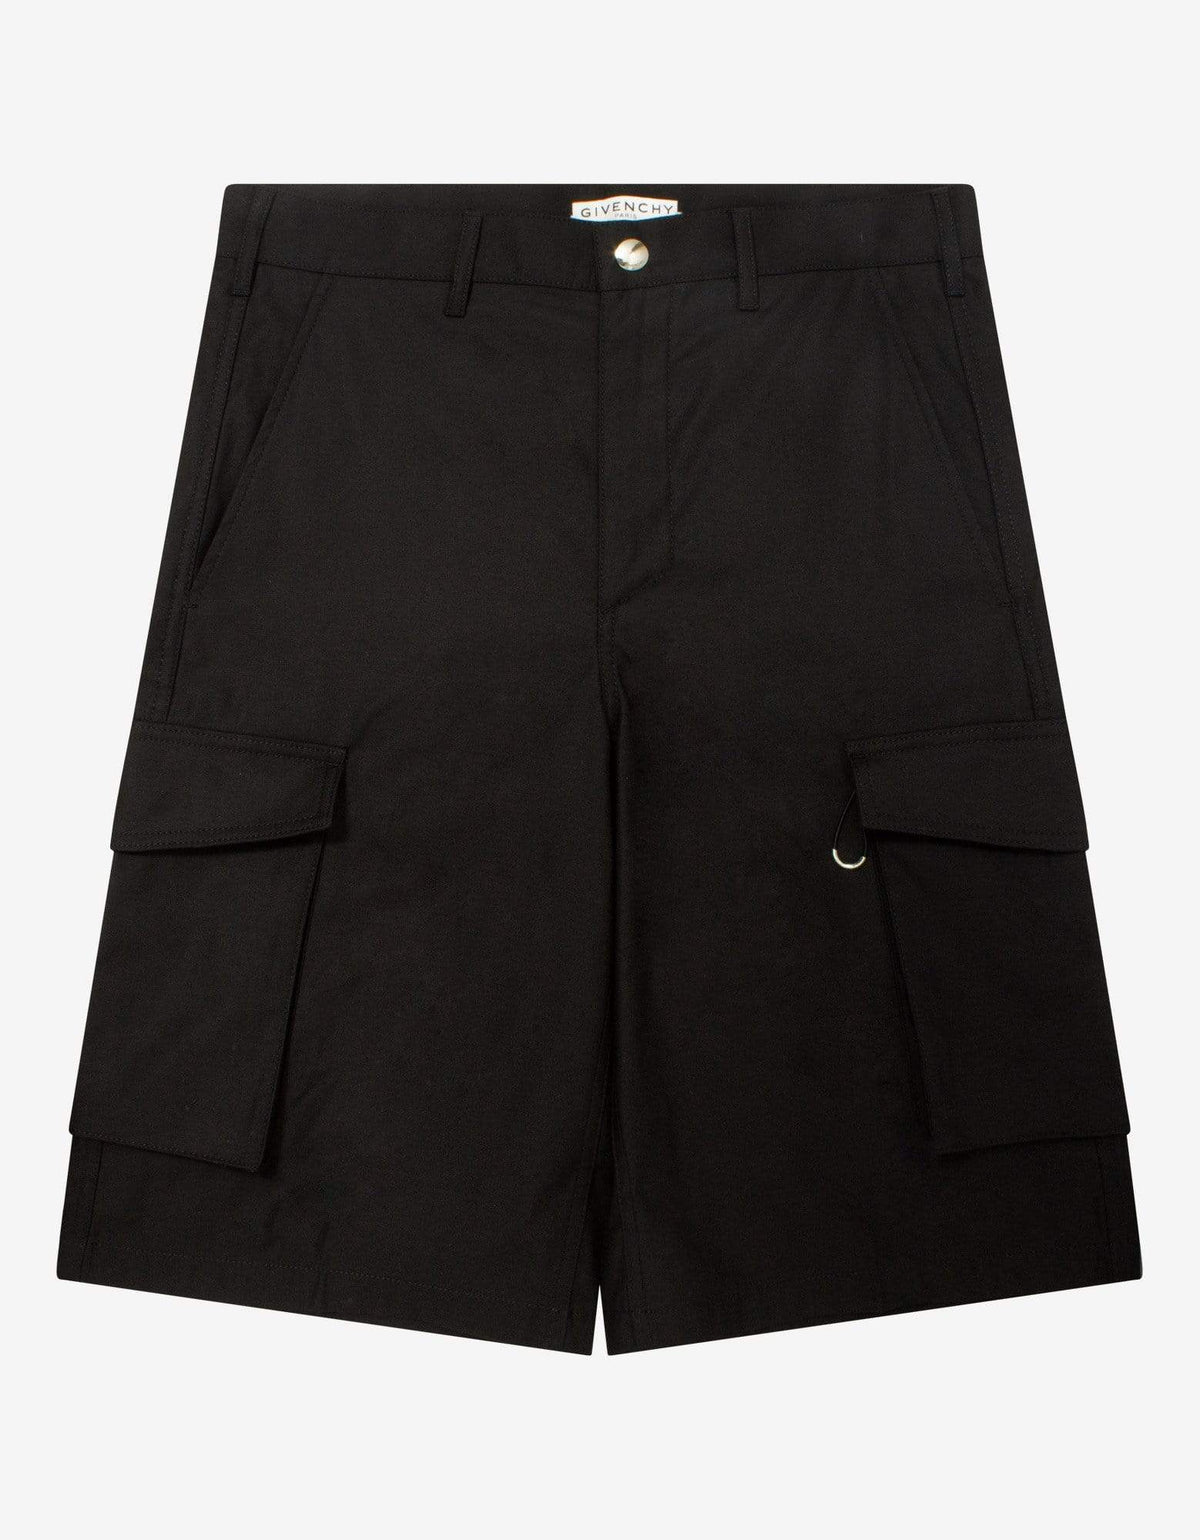 Givenchy Black Cargo Shorts